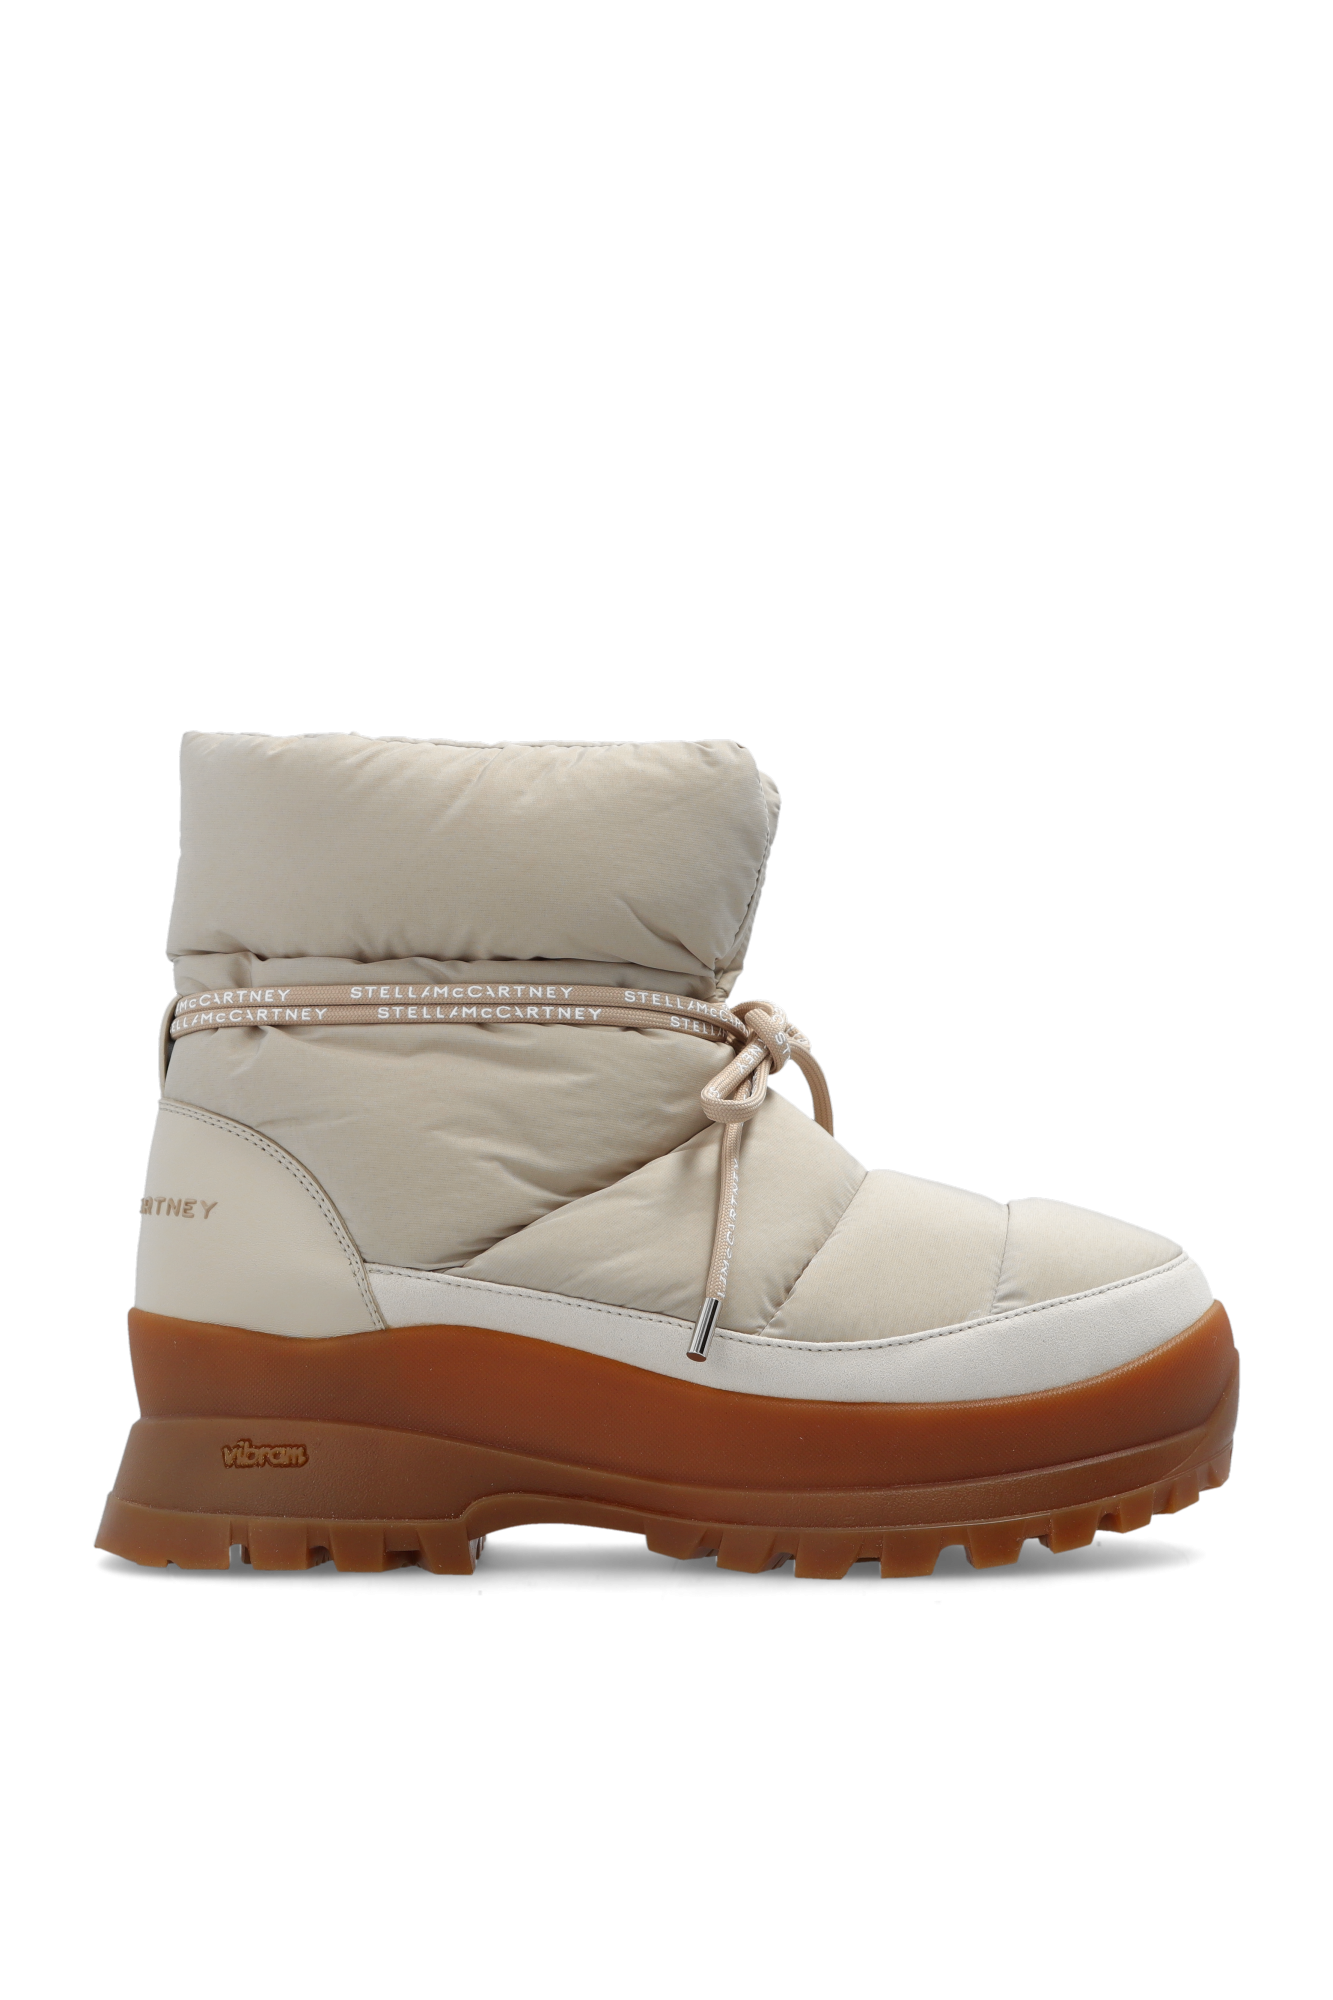 Stella McCartney ‘Trace’ snow boots